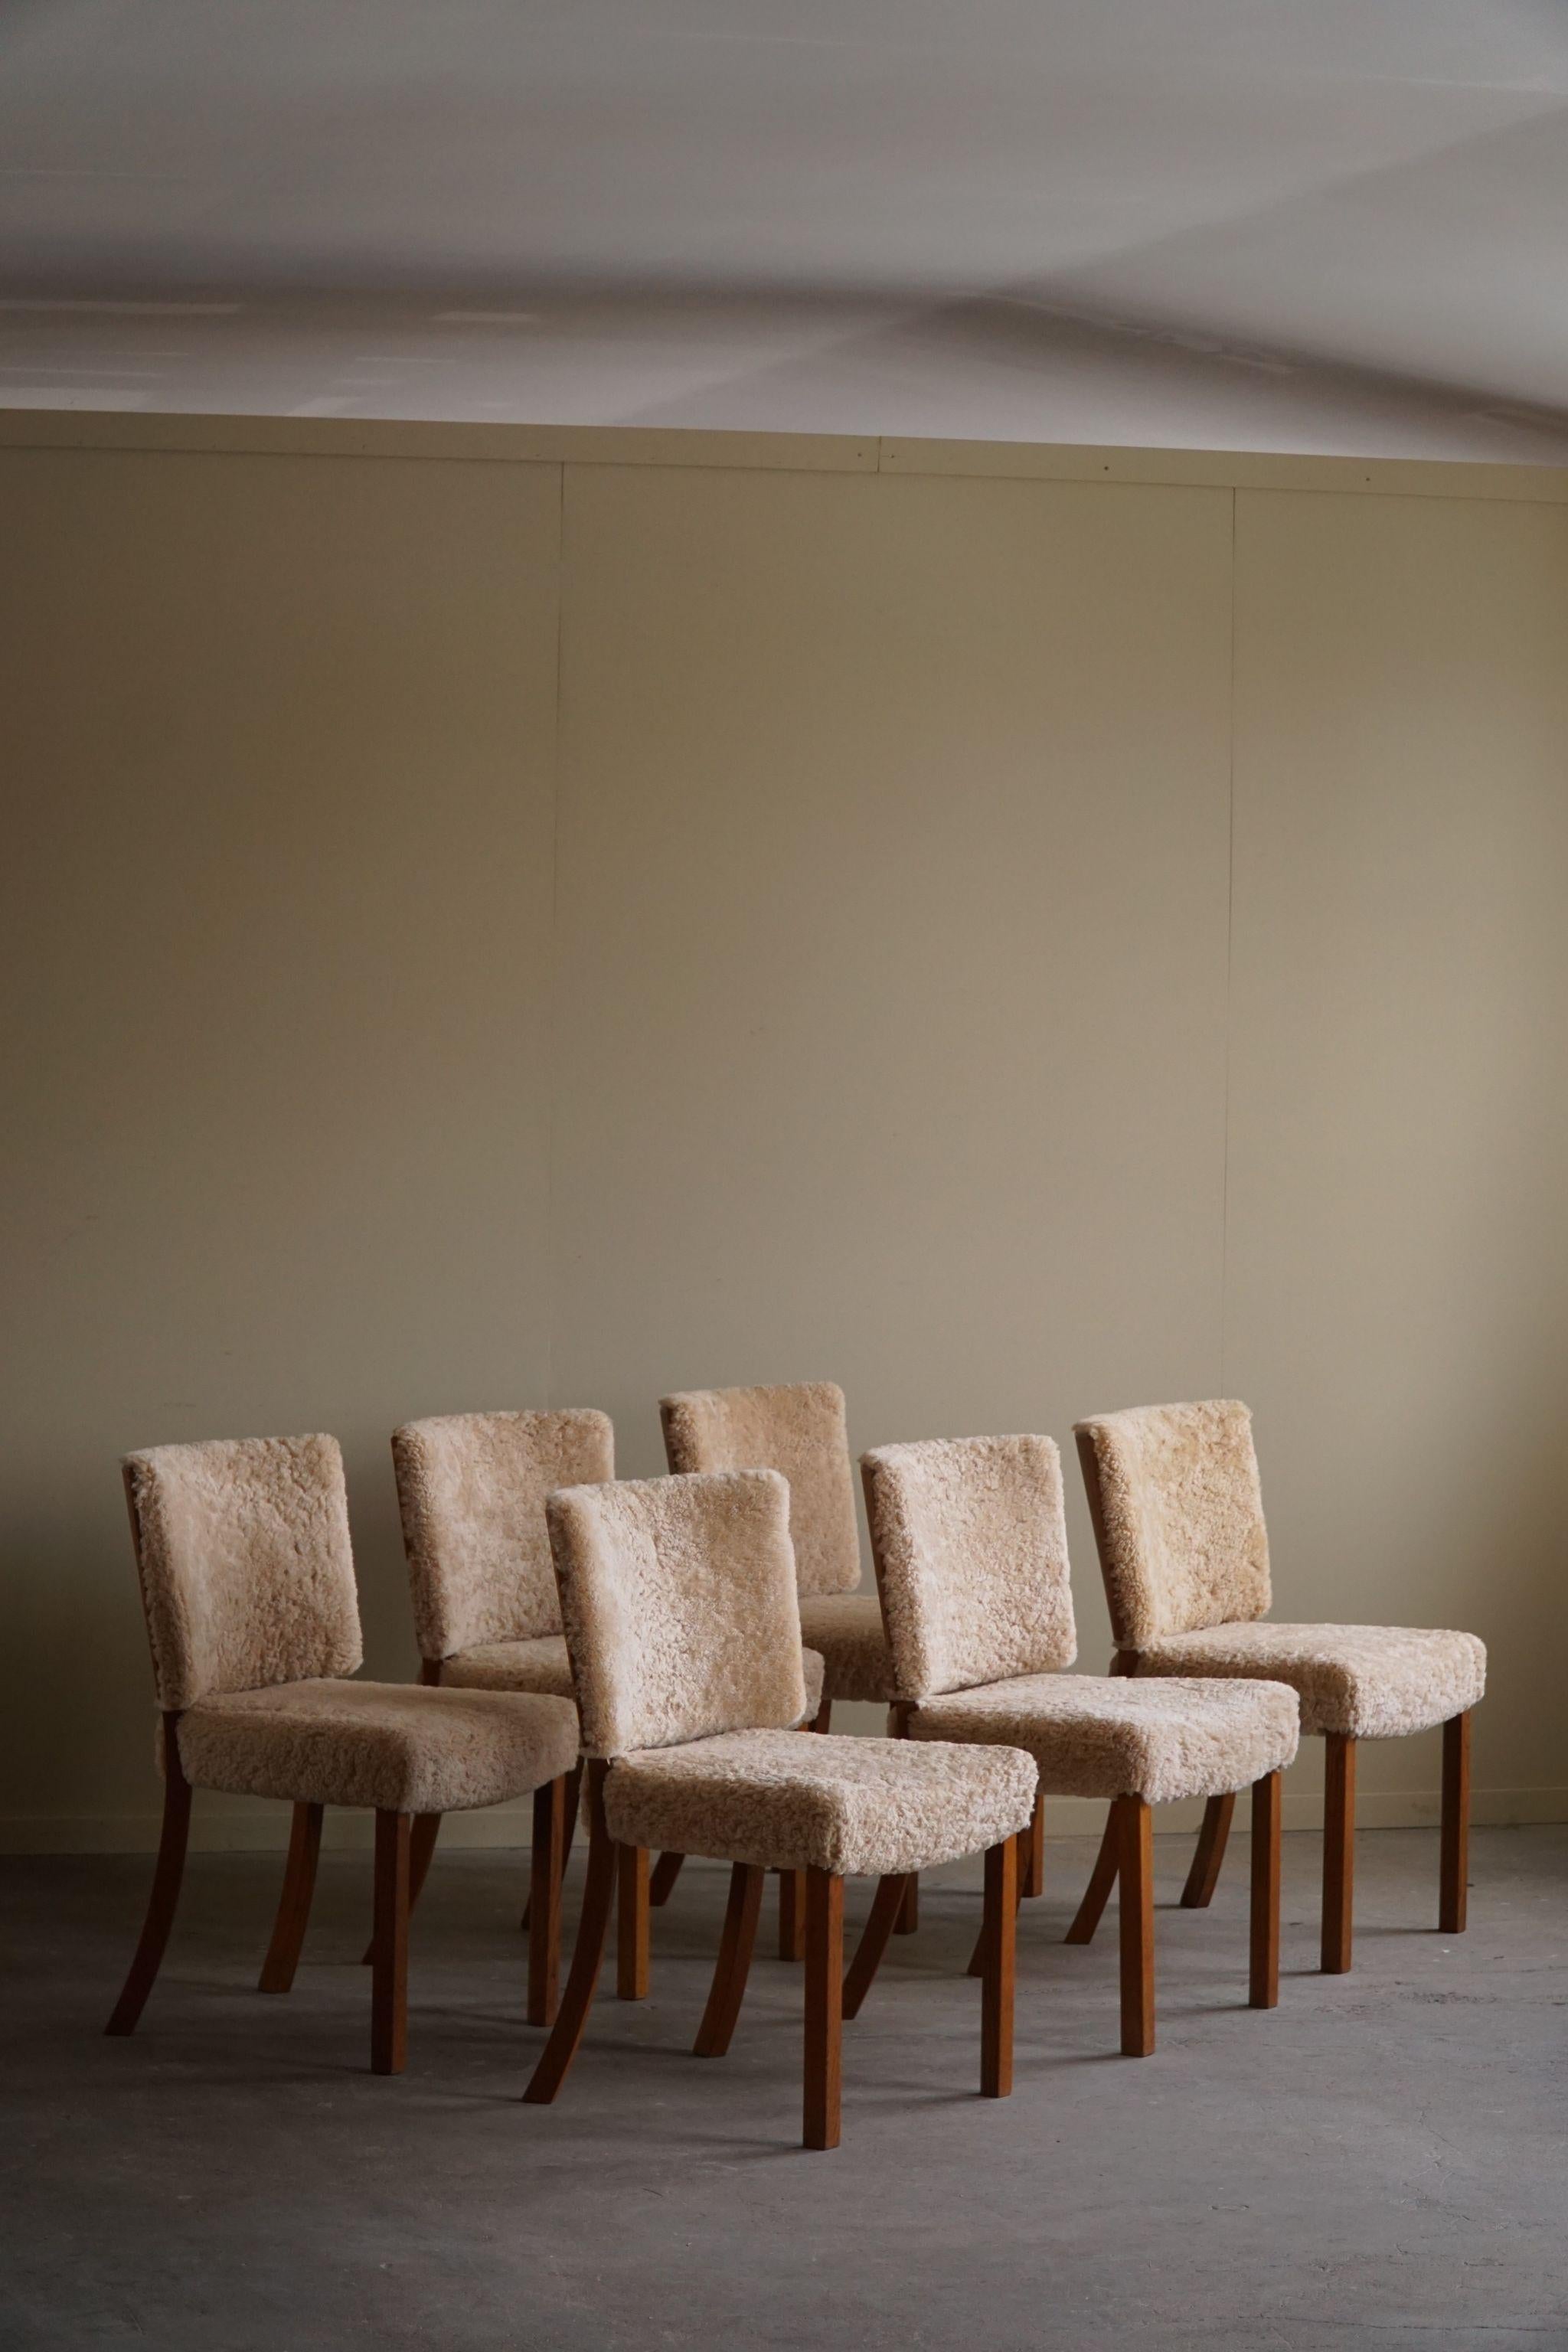 A set of 6 Dining Chairs in Oak and Lambswool, Danish Modern, Kaj Gottlob, 1950s For Sale 7